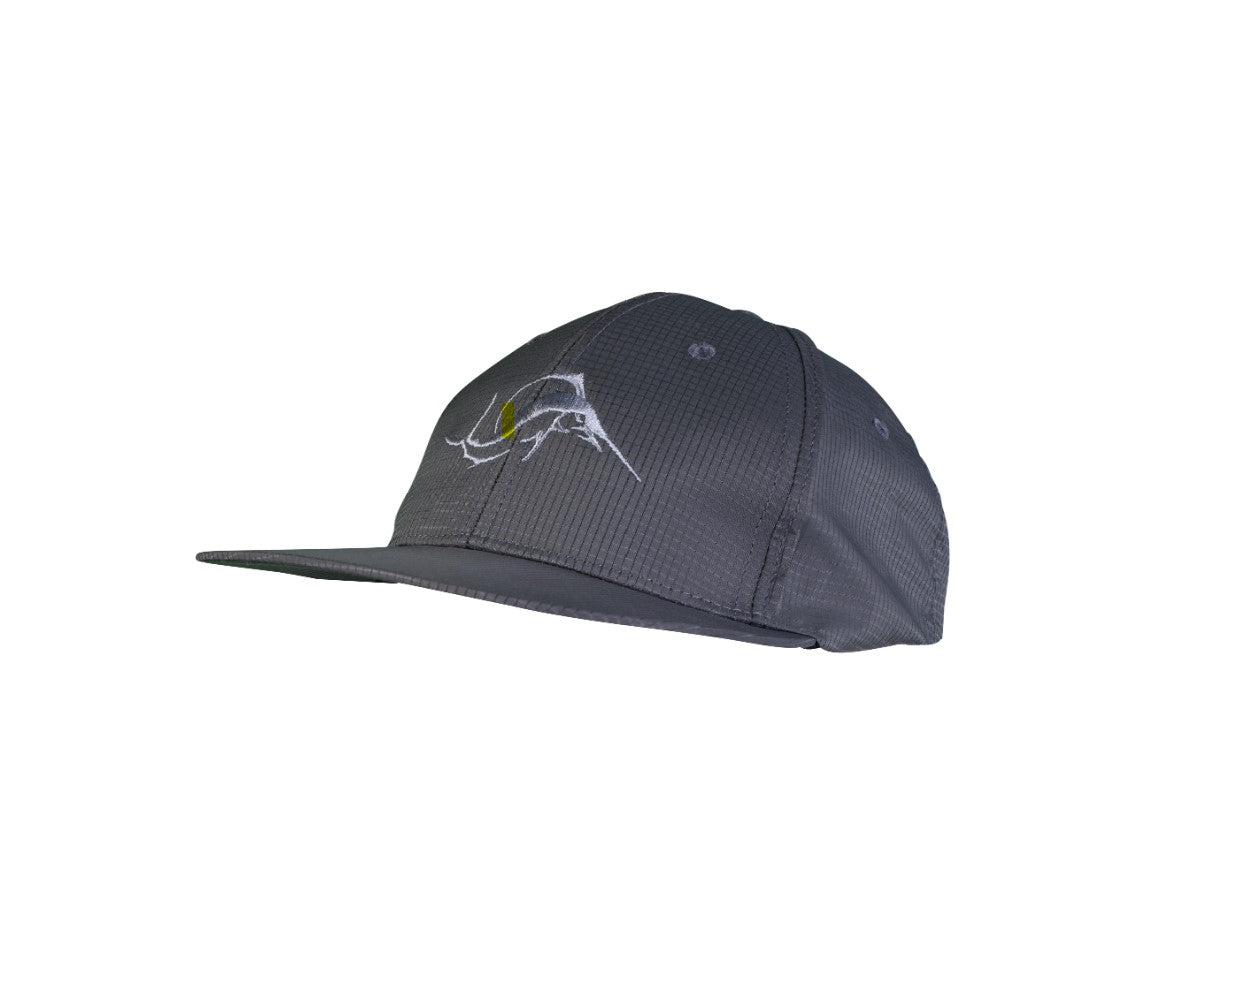 SAILFISH Lifestyle Cap כובע לייף-סטייל